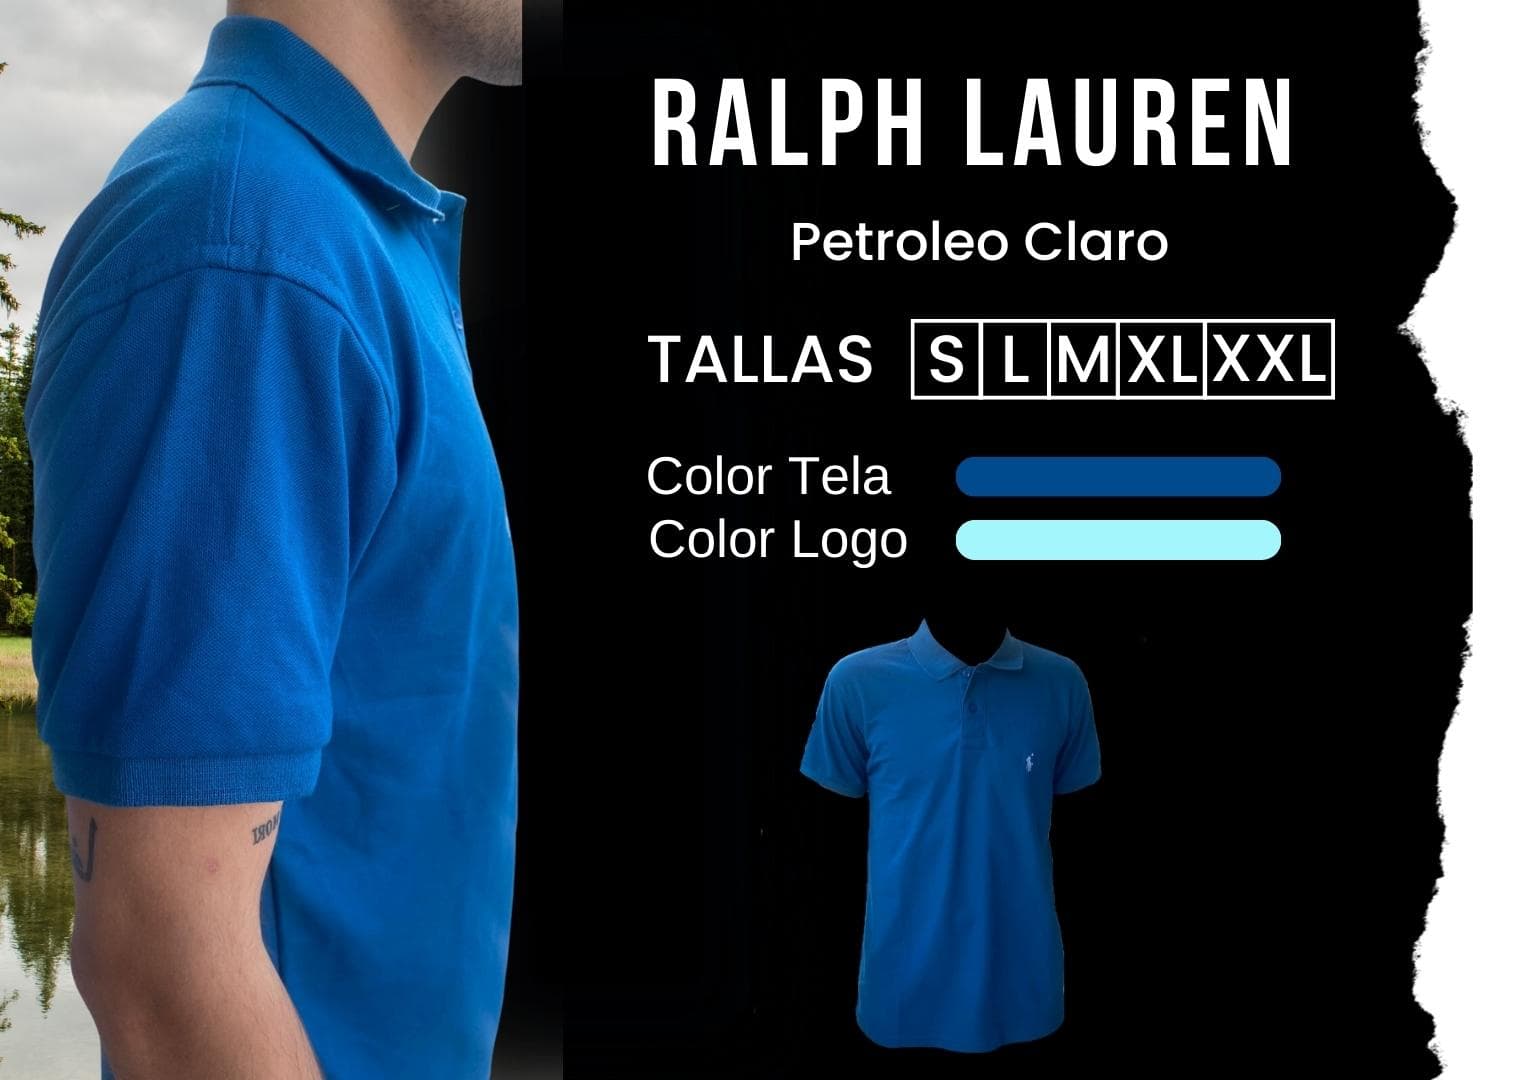 camiseta Ralph Lauren polo hombre tienda olevan color petroleo claro